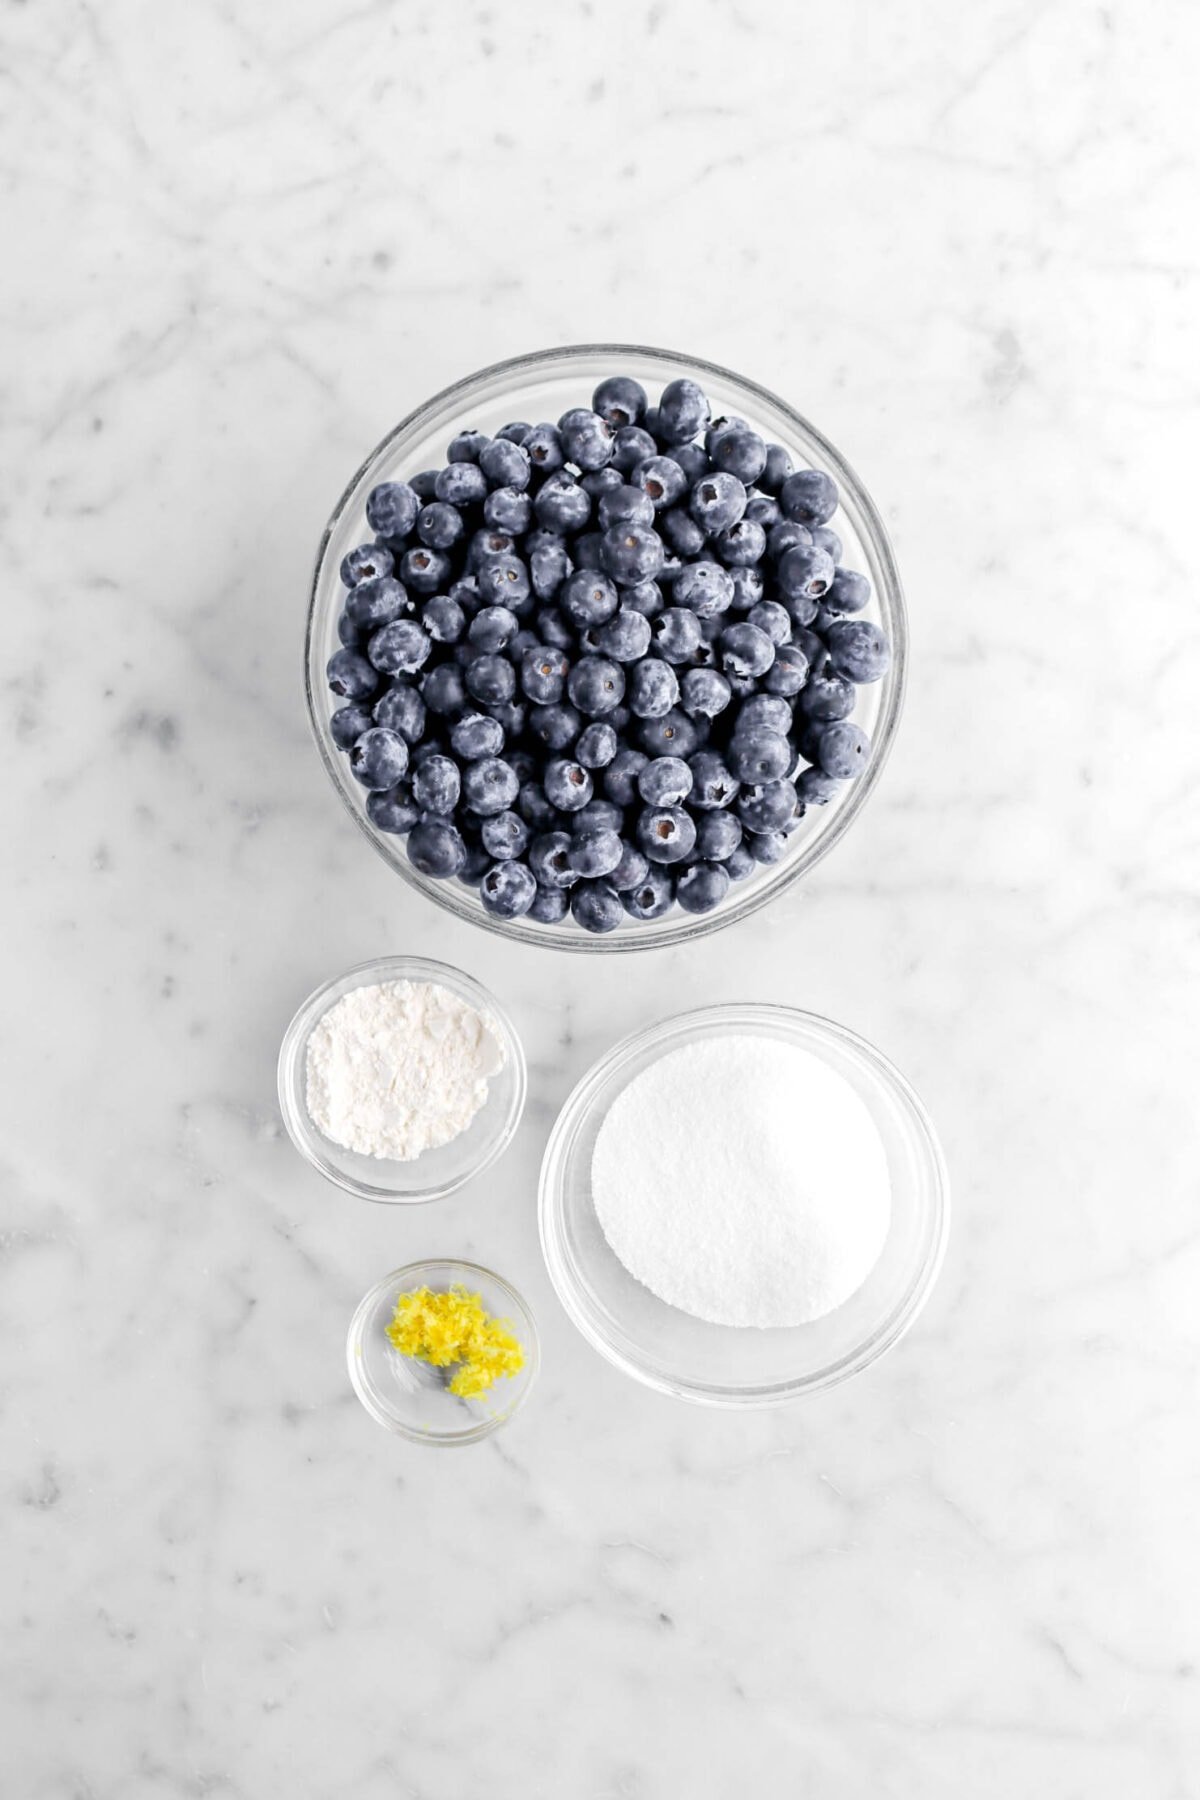 blueberries, flour, sugar, and lemon zest on marble surface.